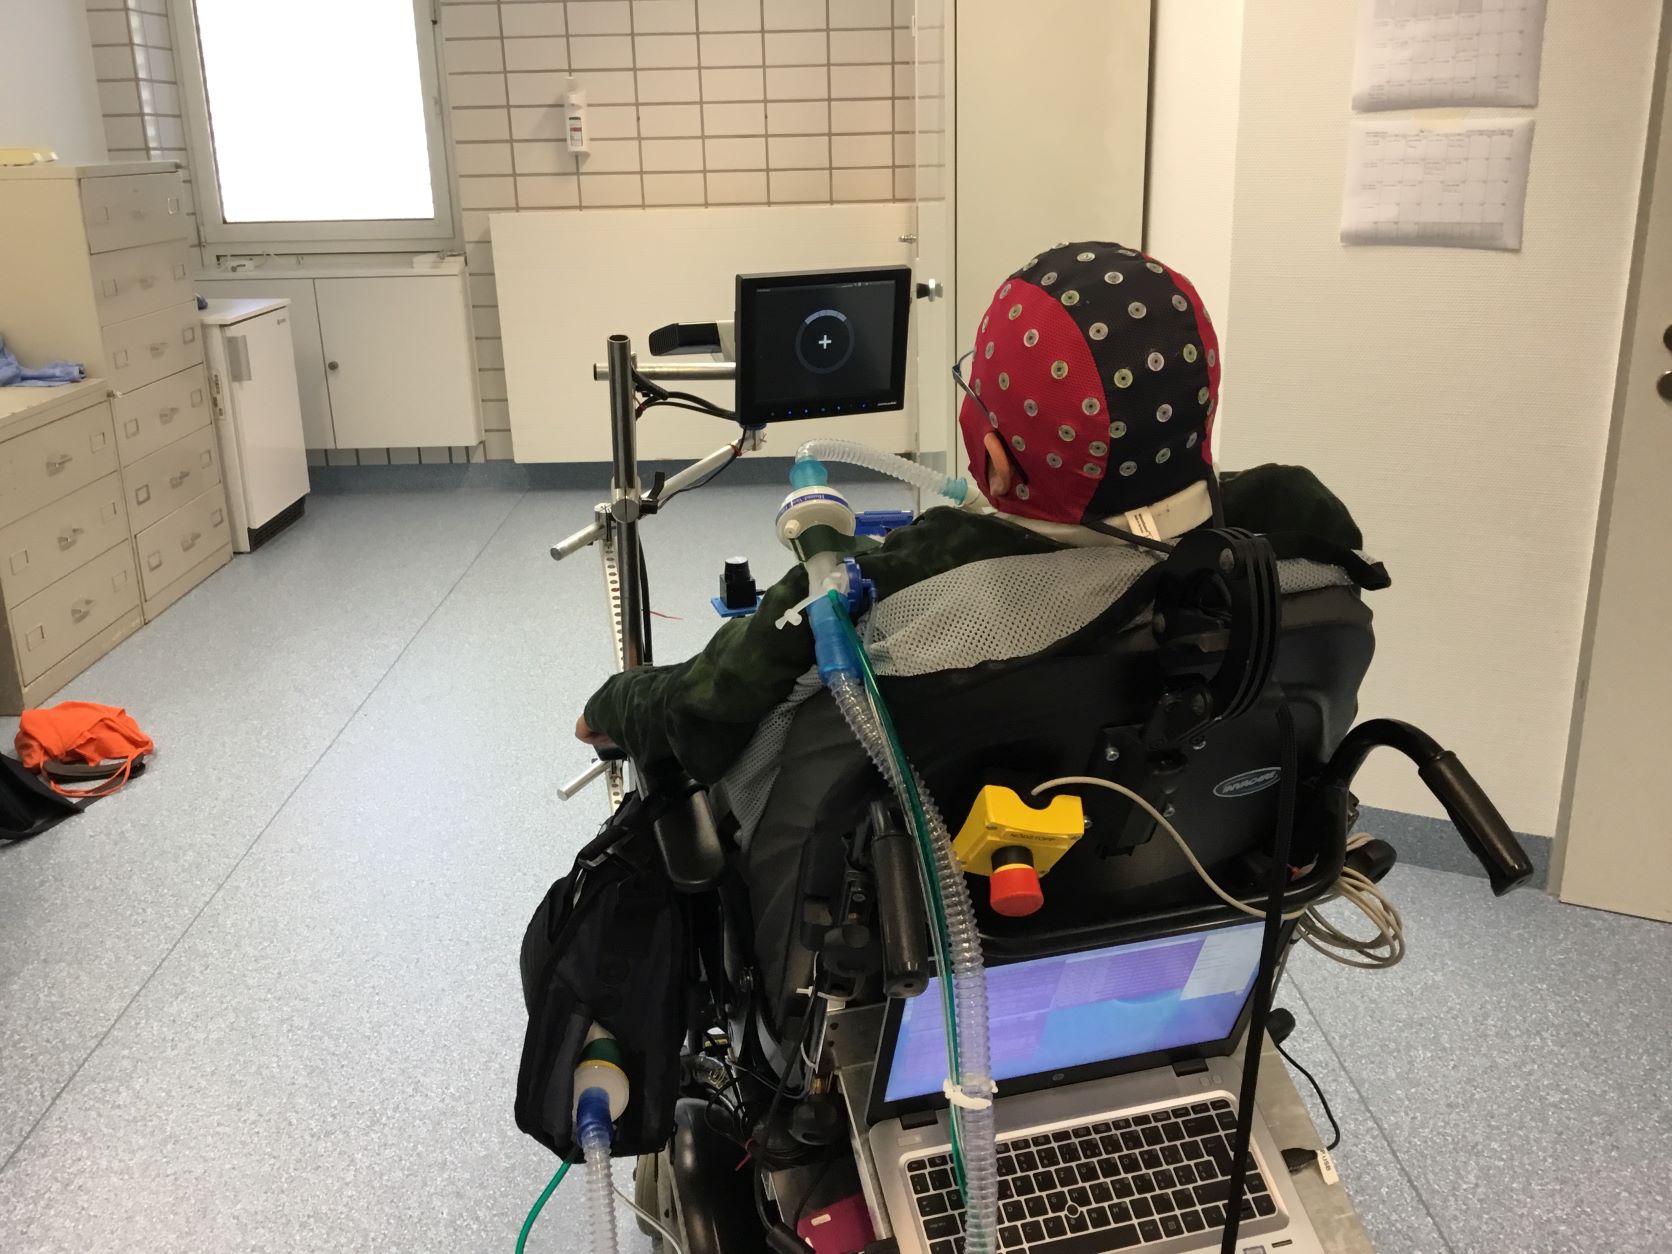 Jose Millan brain-powered wheelchair prototype